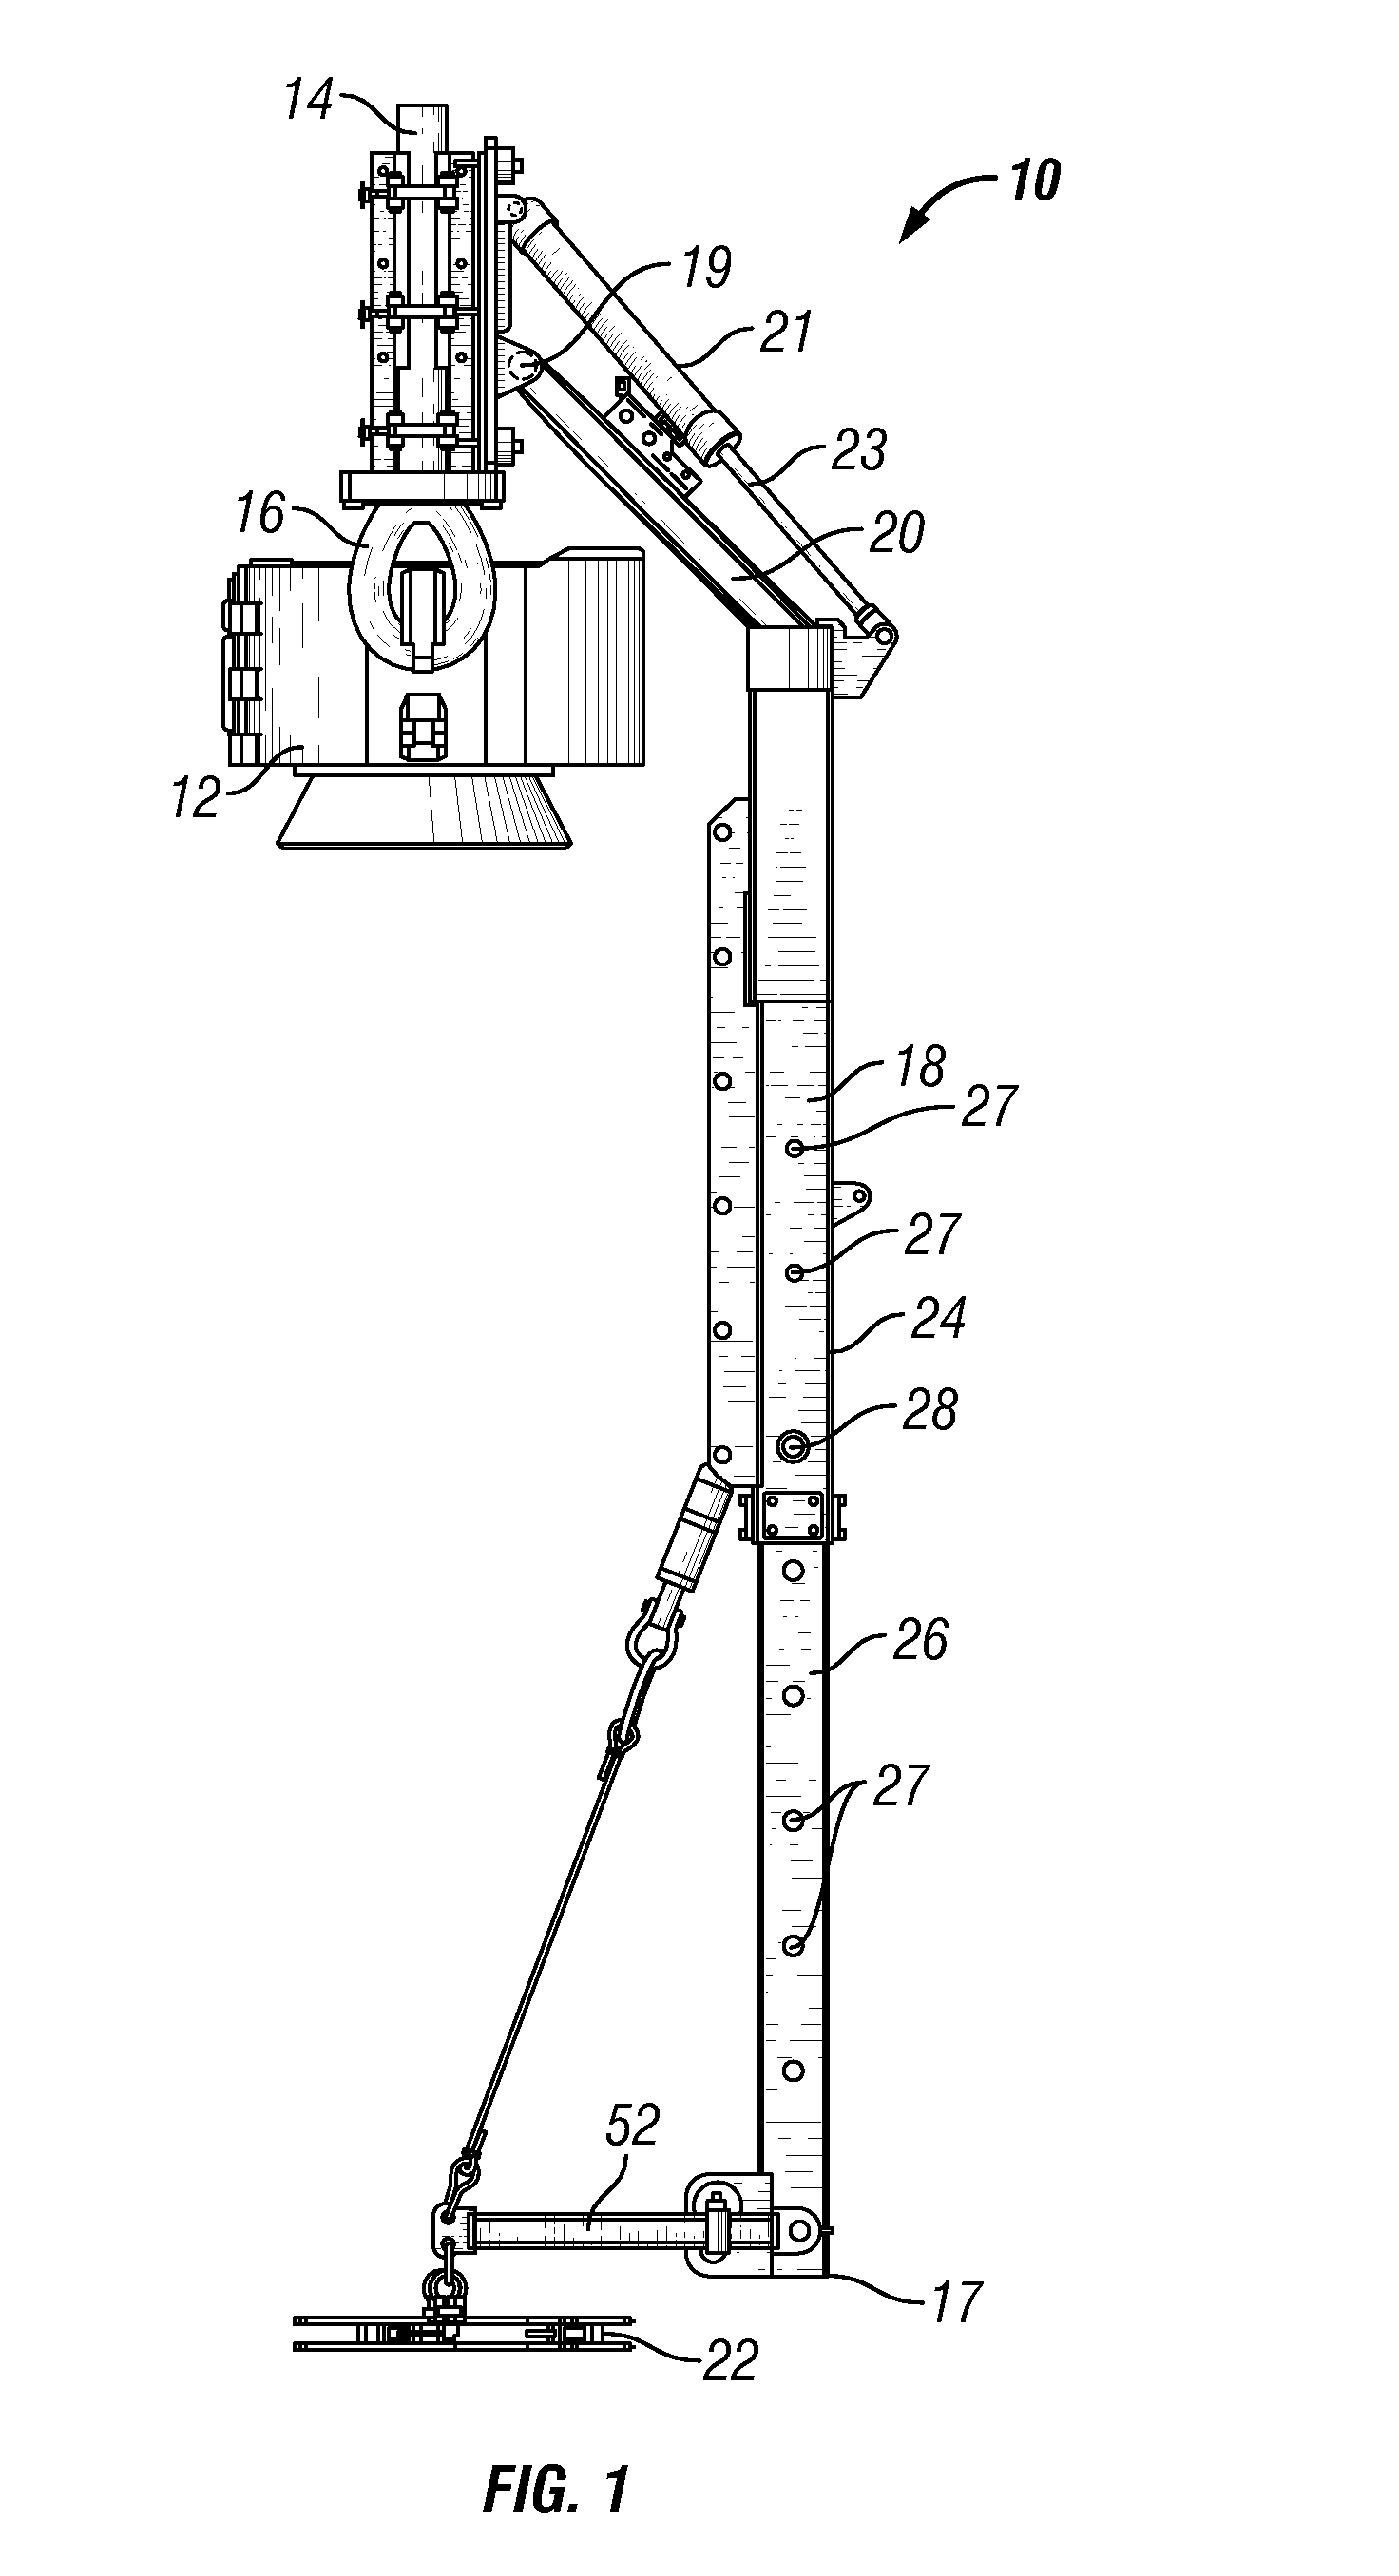 Light-weight single joint manipulator arm